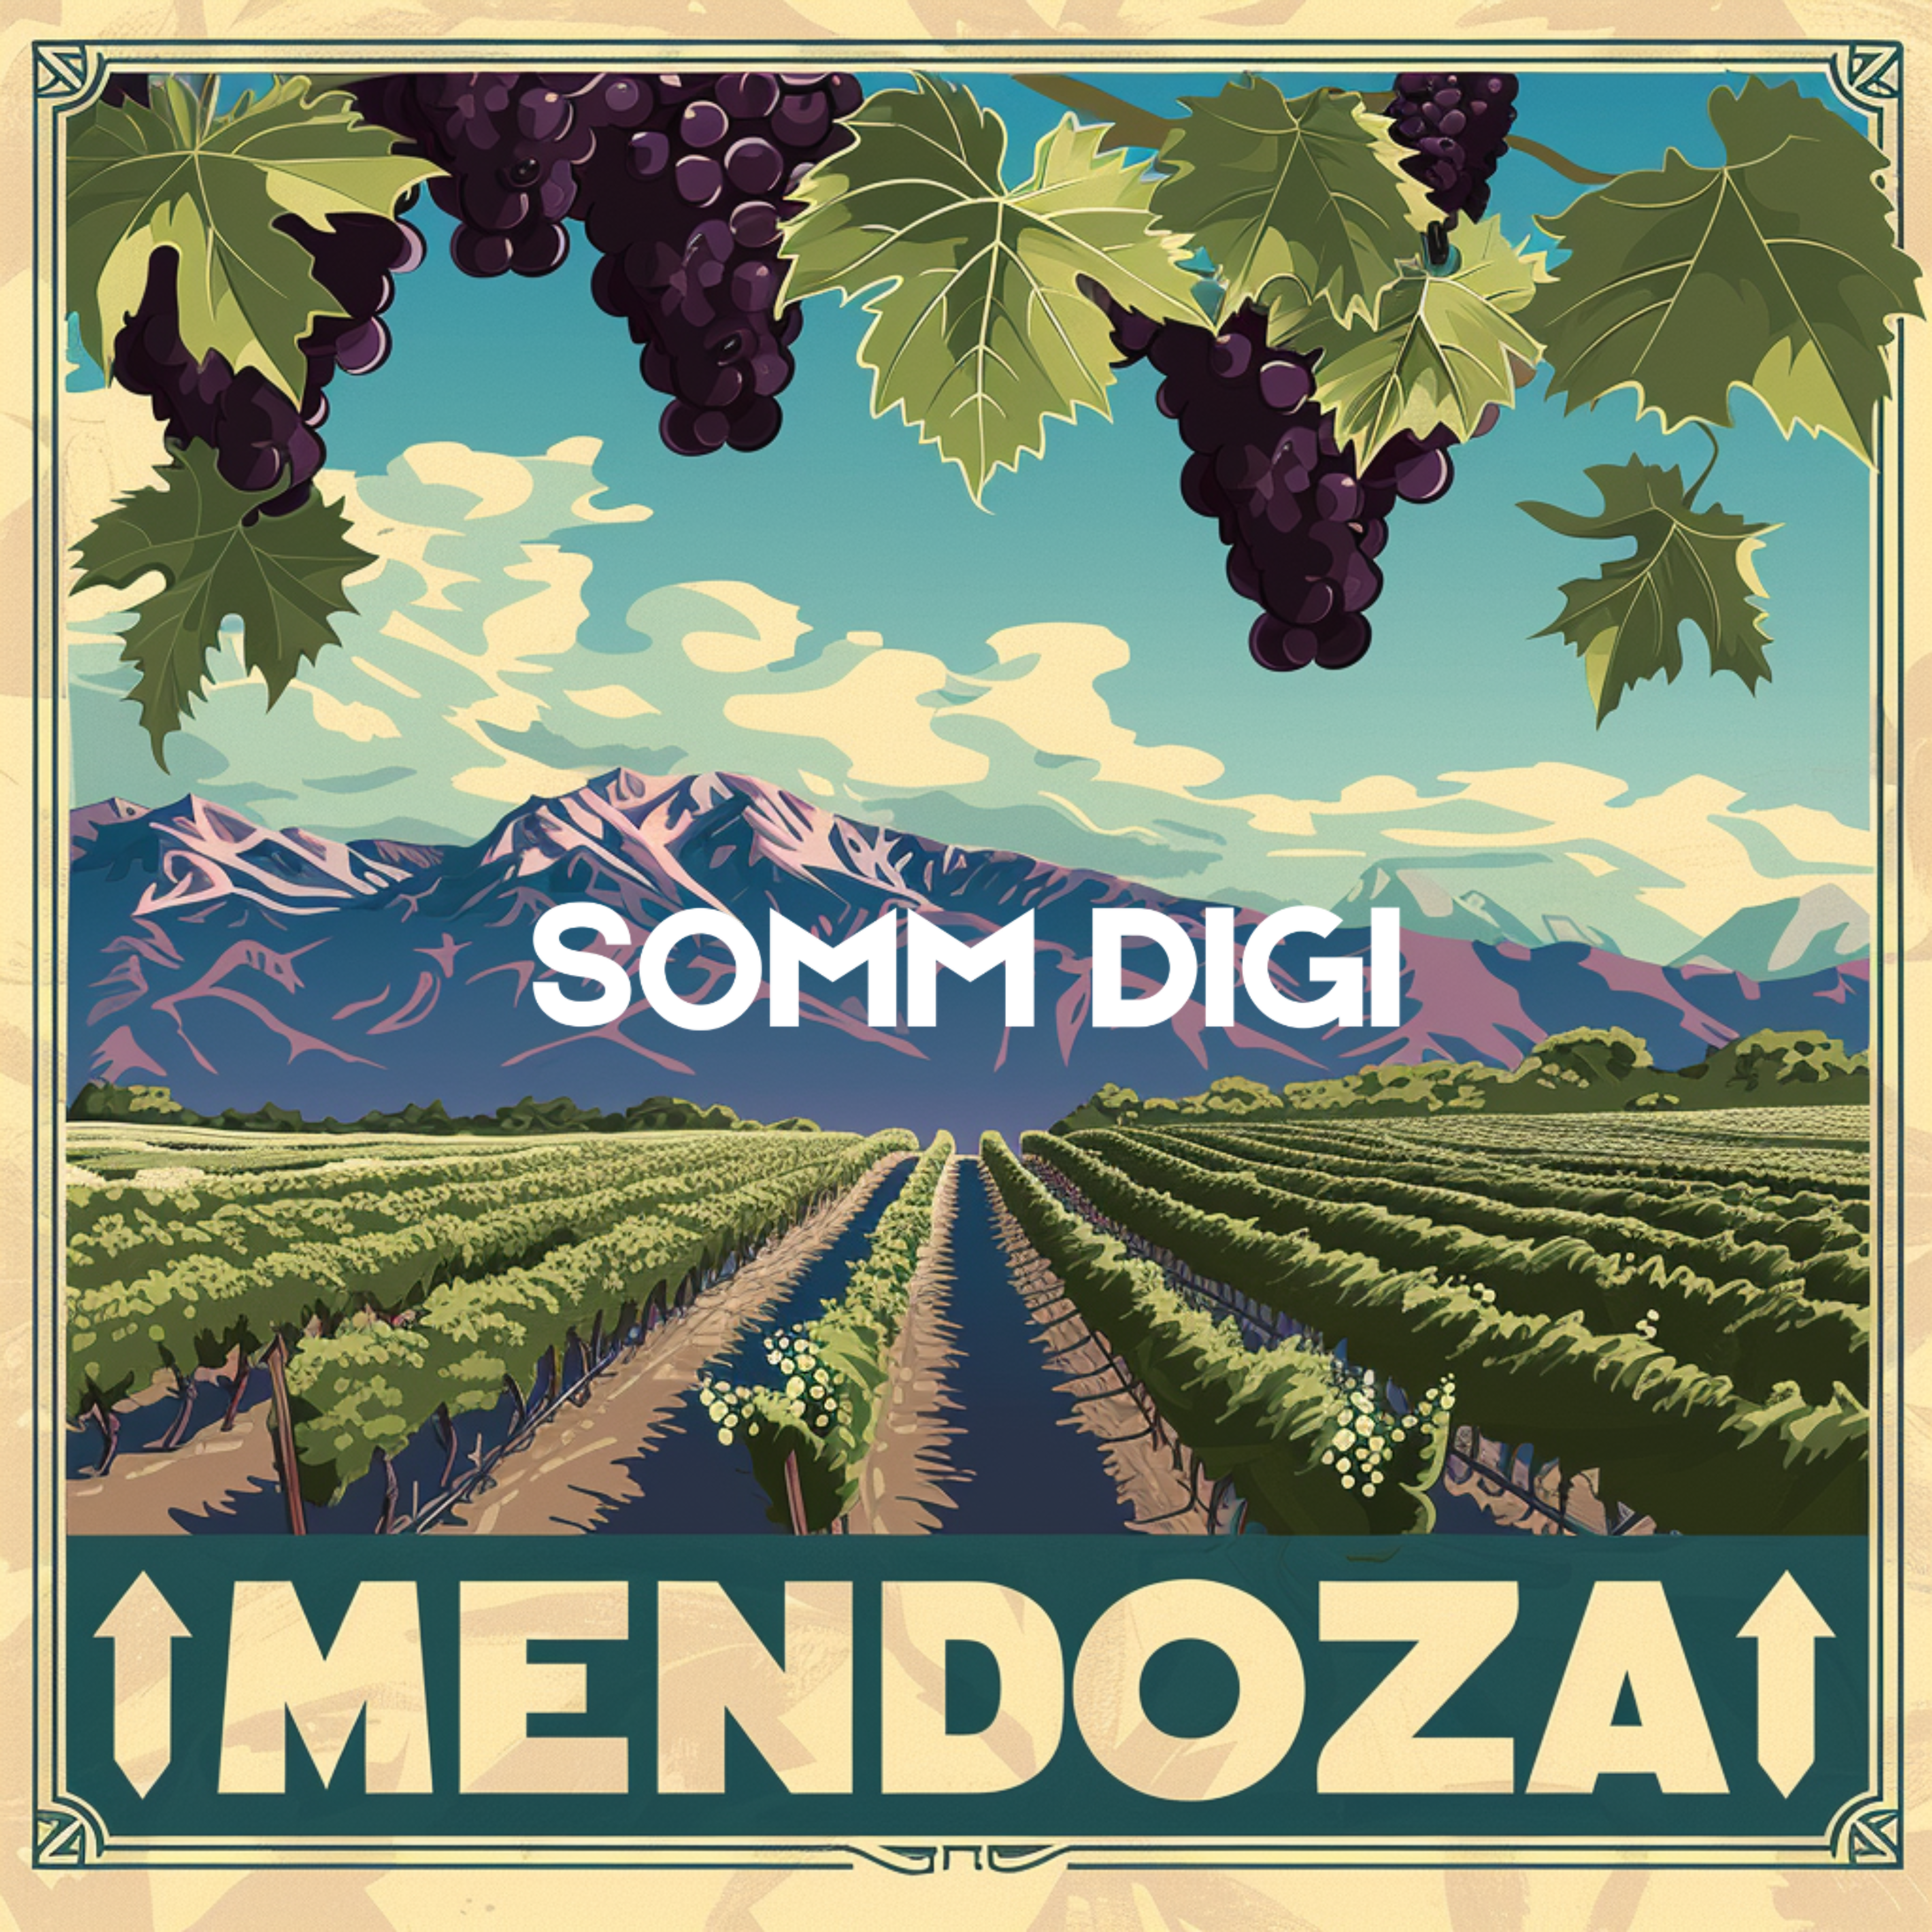 Mendoza Travel Poster - Digital Art